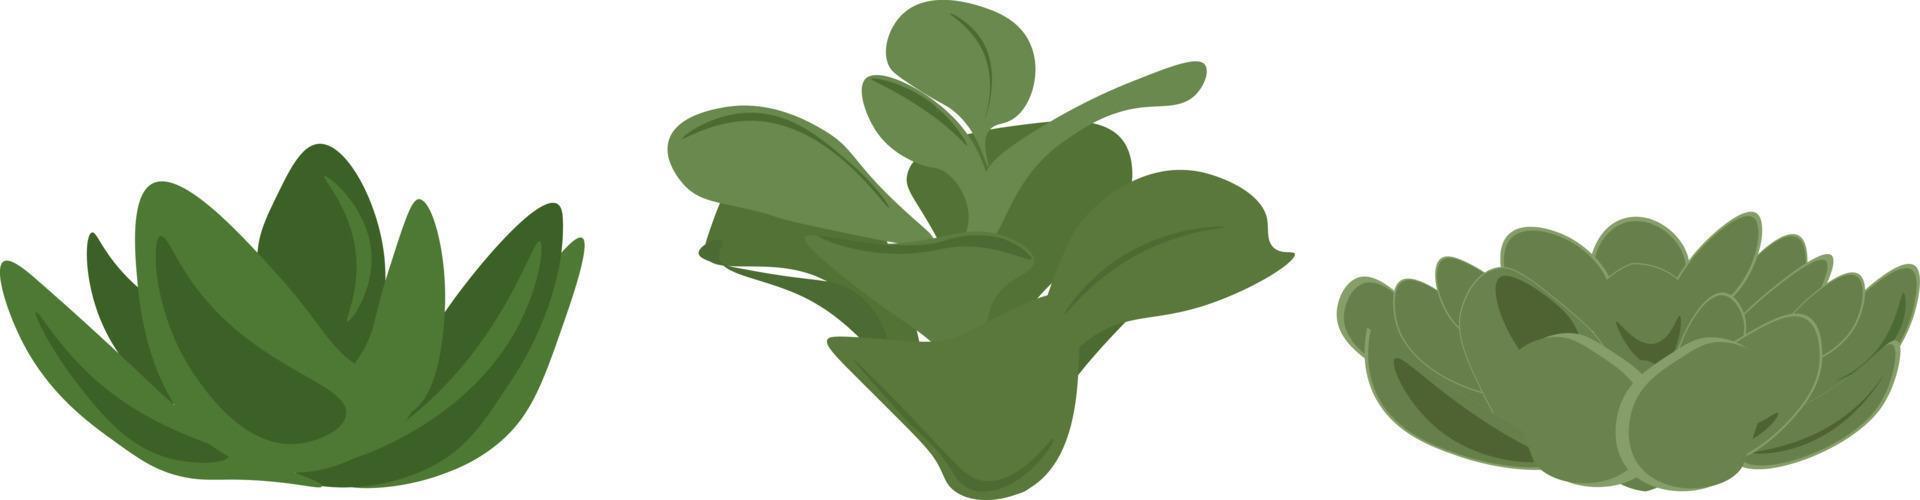 green succulents plant illustration set vector